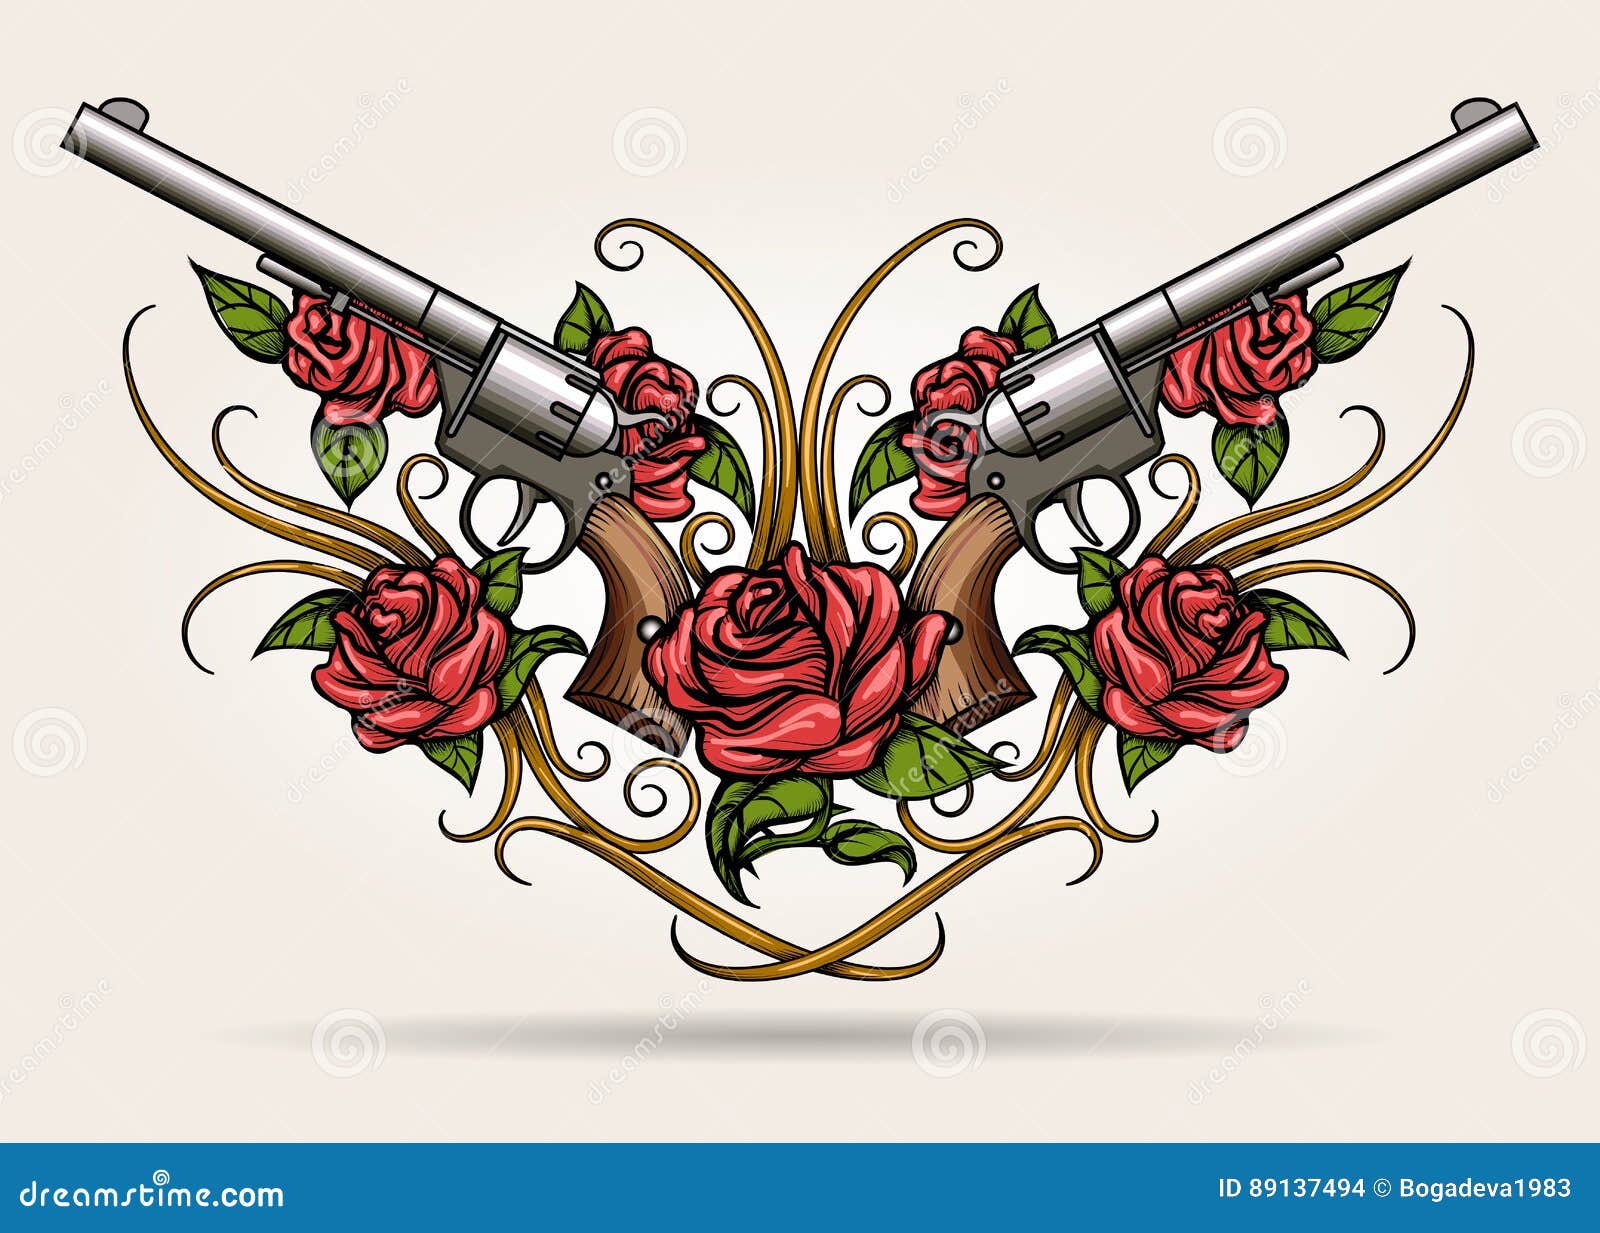  Gun  Rose Tattoo  Done by  Adikt Ink Tattoo Studios  Facebook